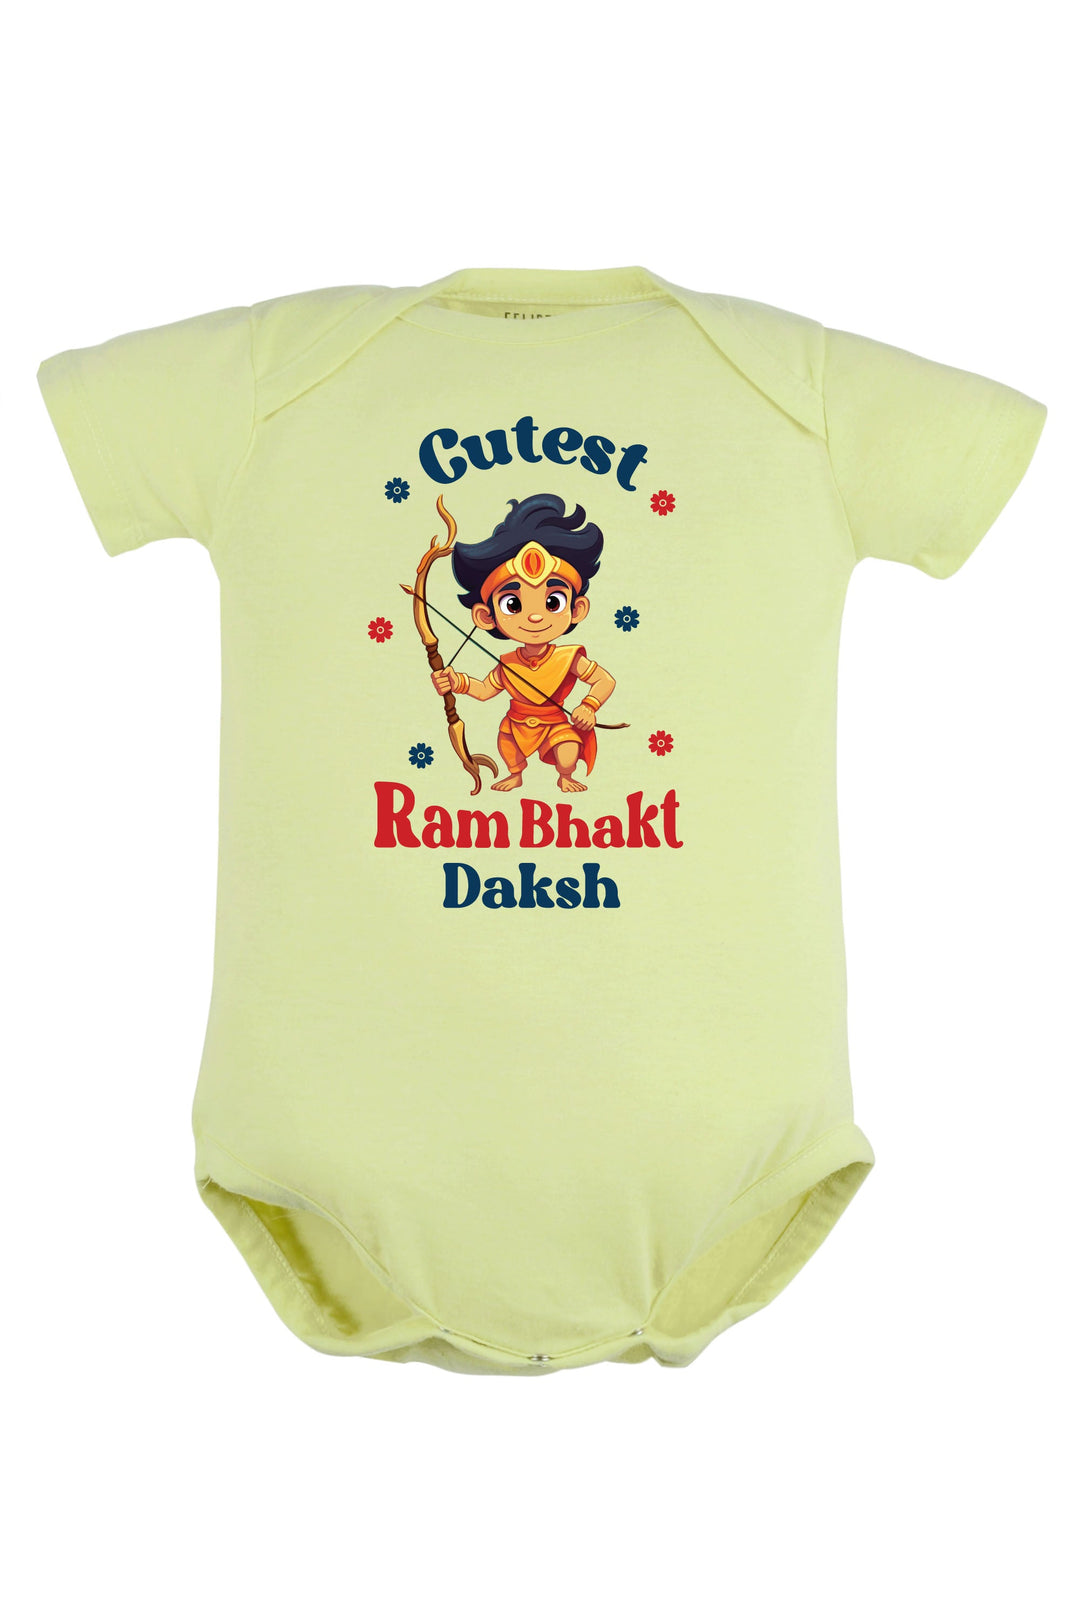 Cutest Ram Bhakt Baby Romper | Onesies w/ Custom Name